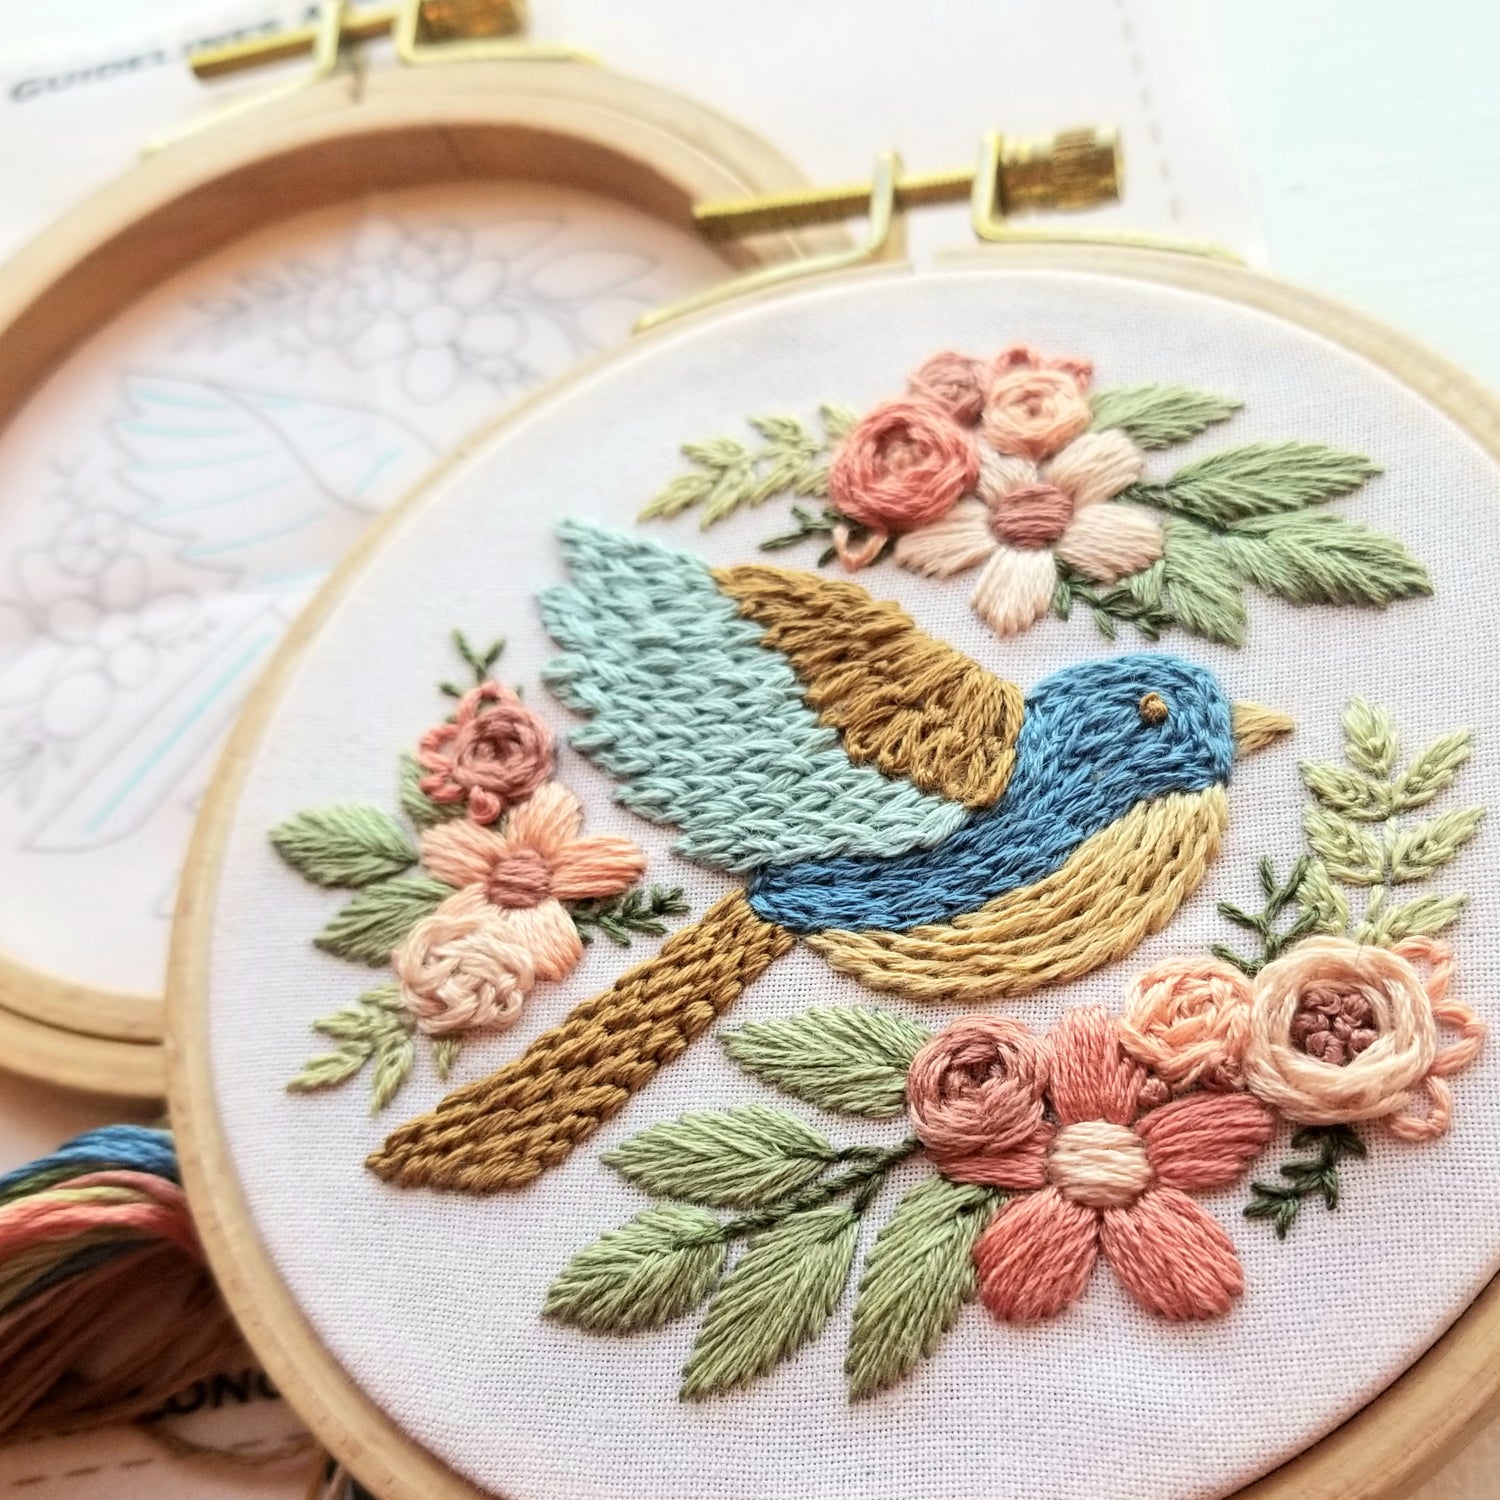 Beechwood Embroidery Hoops – Jessica Long Embroidery